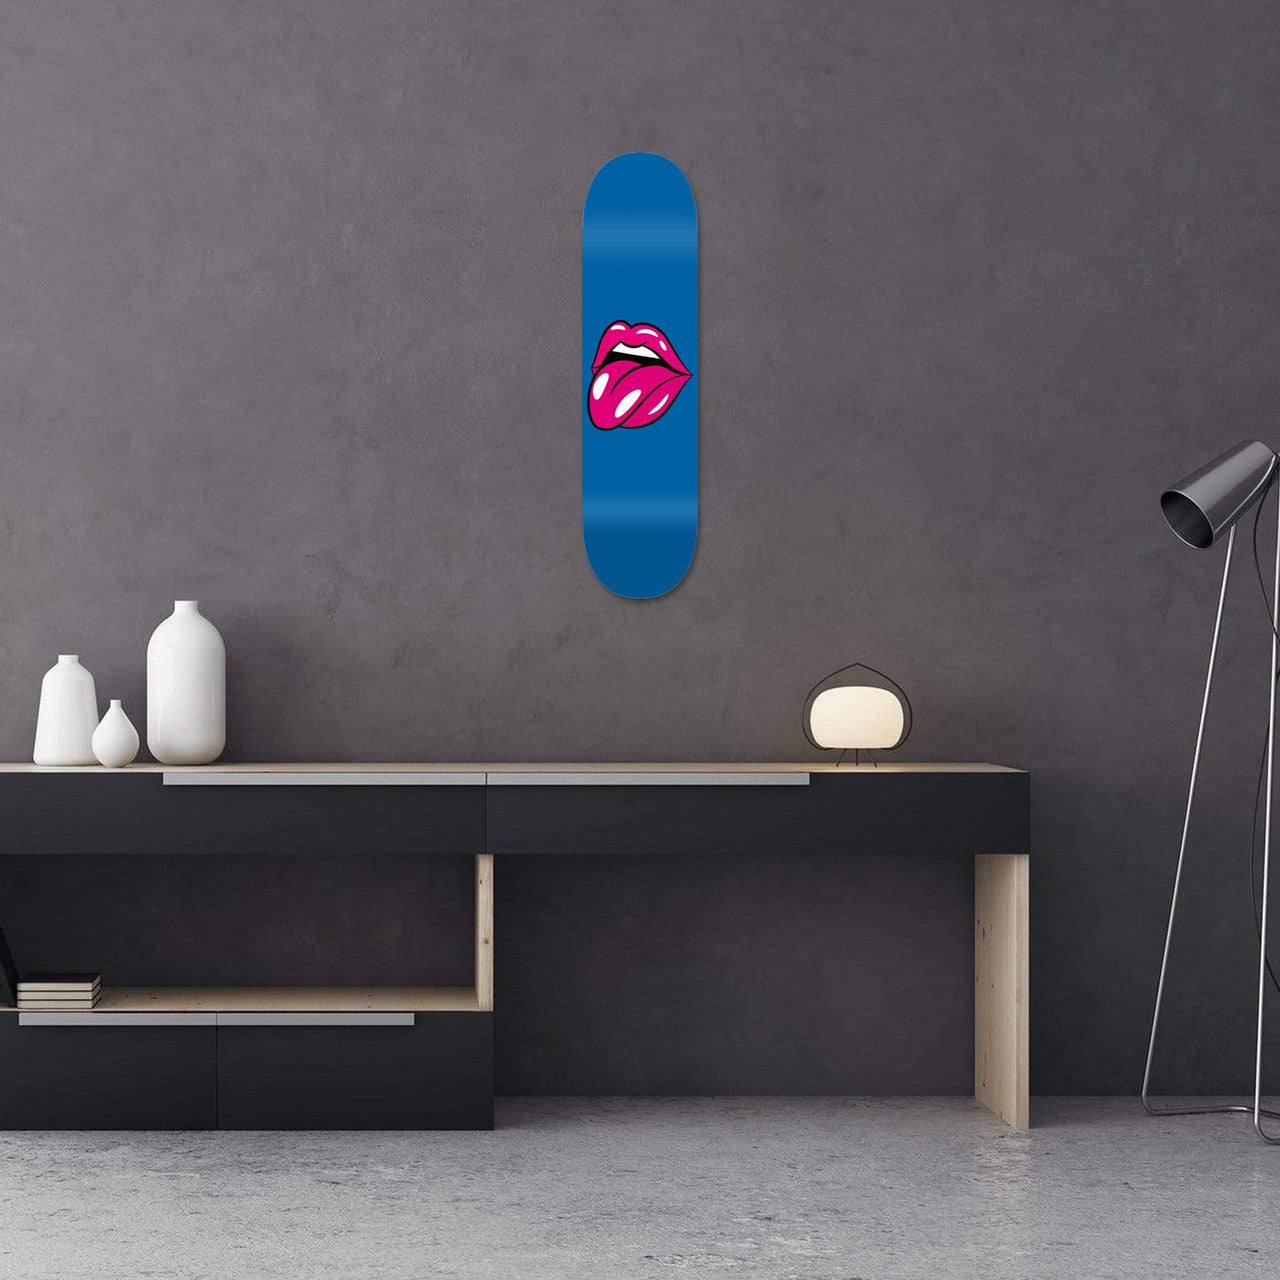 Bundle: "Green & Blue & Azure Lips" - Skateboard - The Art Lab Acrylic Glass Art - Skateboards, Surfboards & Glass Prints Wall Decor for your Home.